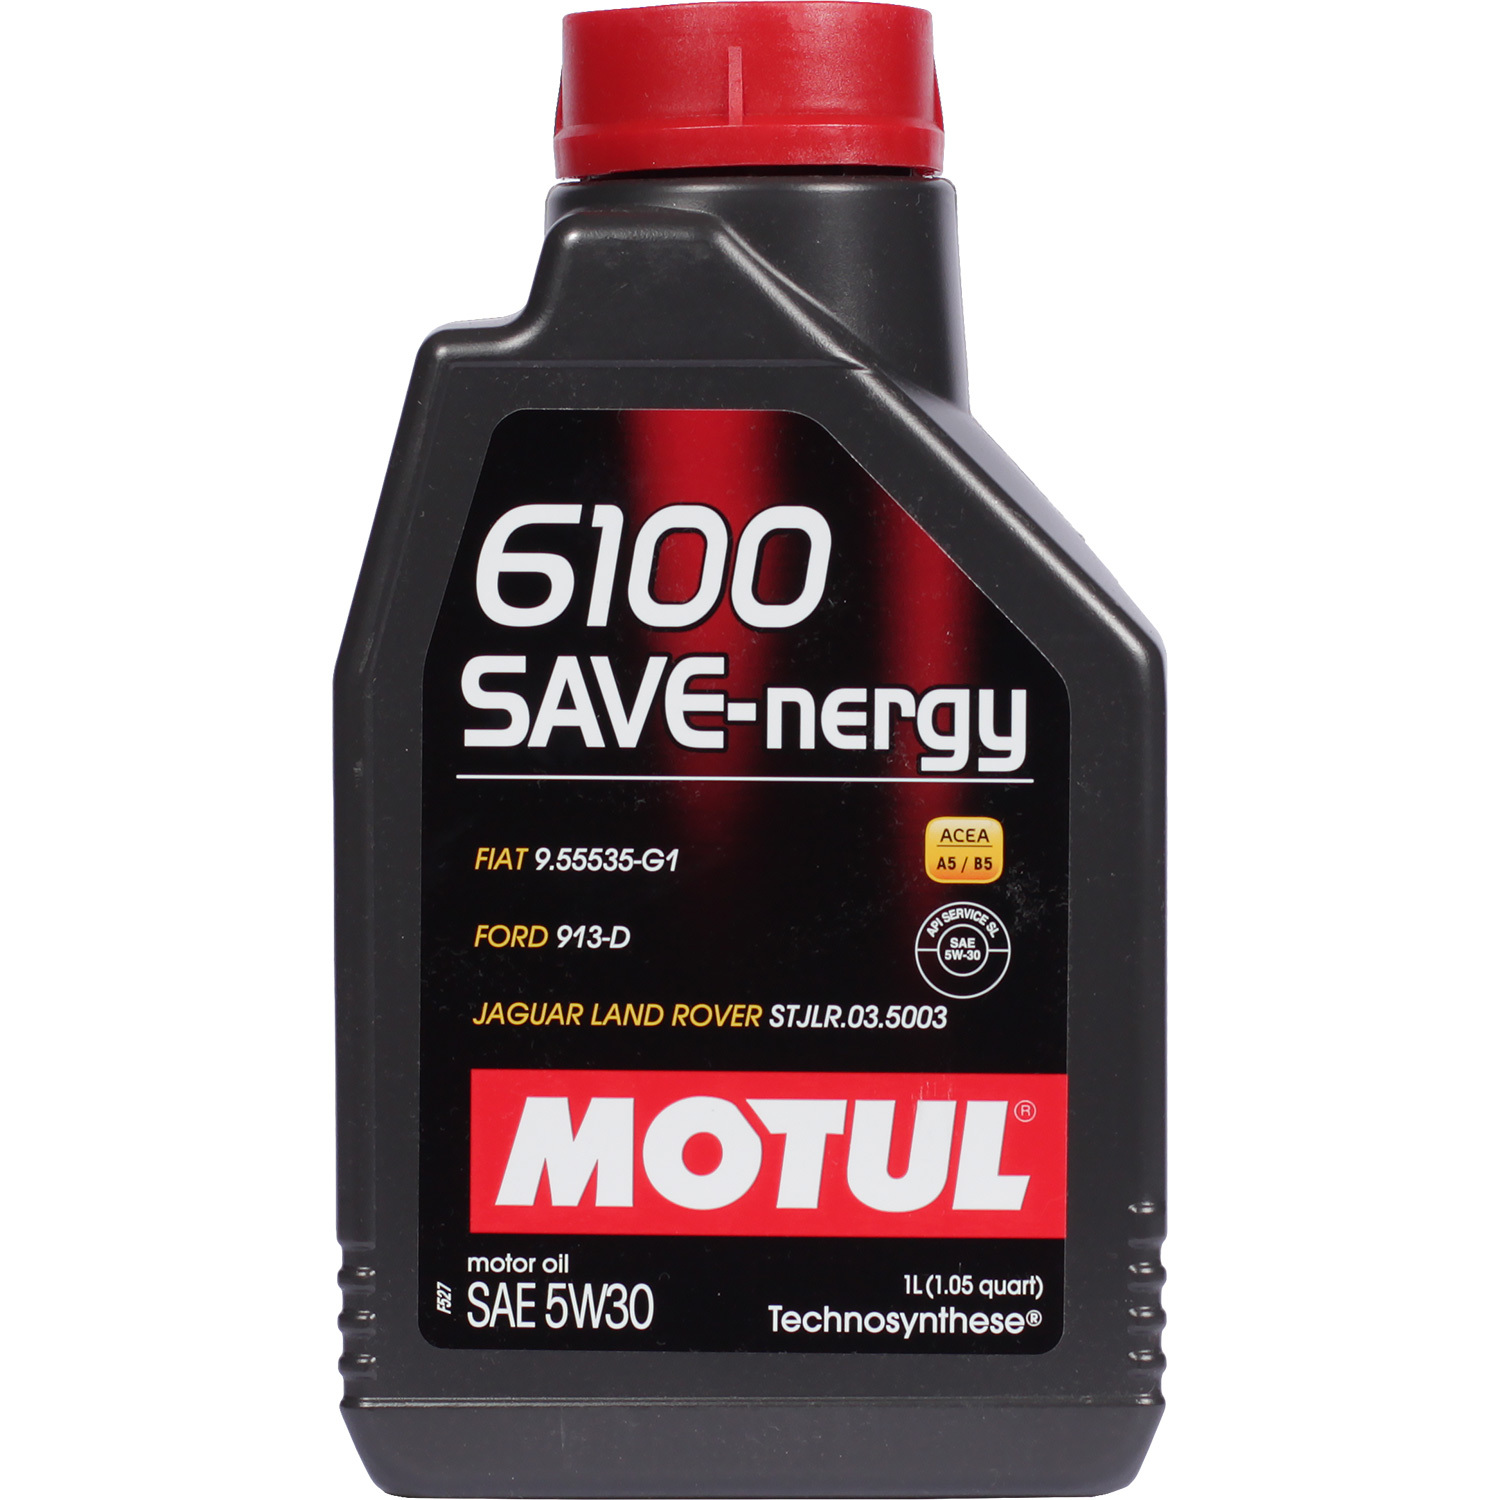 Motul Моторное масло Motul 6100 SAVE-NERGY 5W-30, 1 л масло моторное motul 300v power 5w 30 синтетическое 2 л